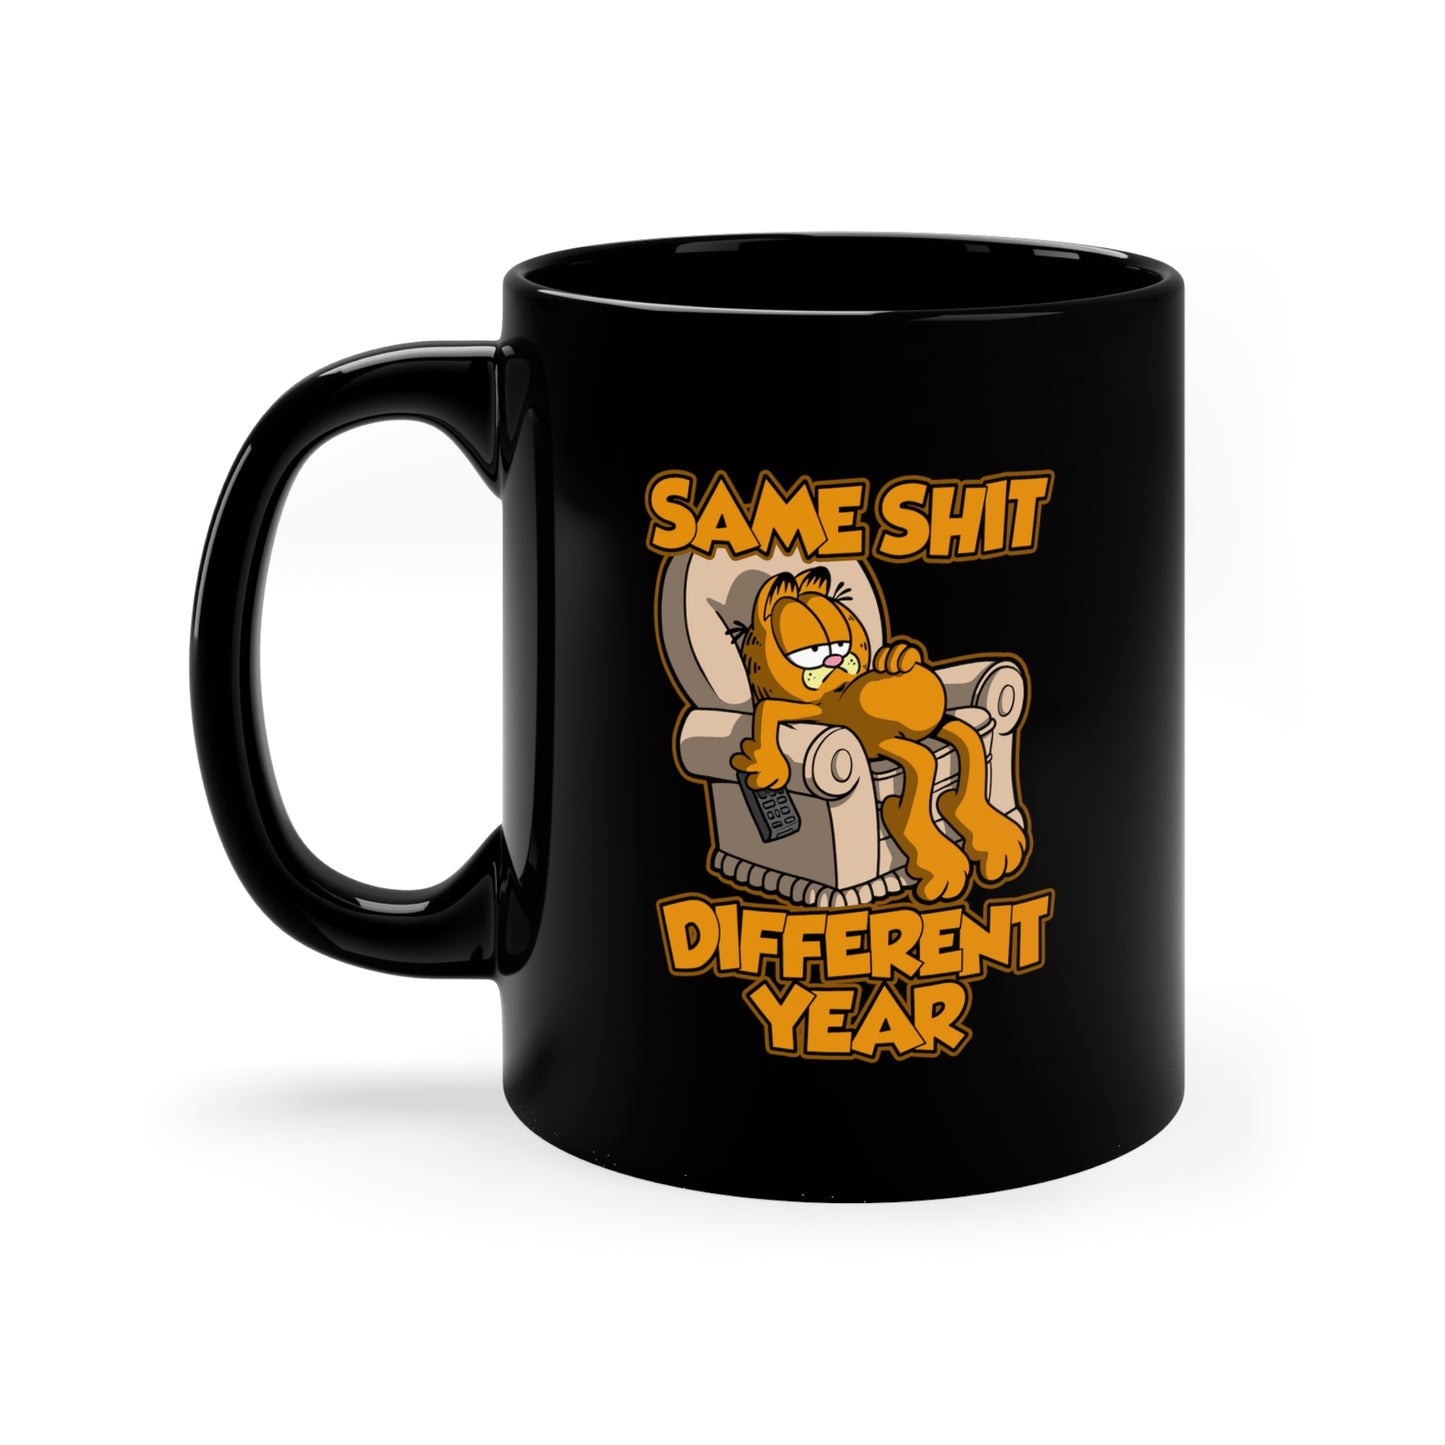 Same Cat, Different Year ceramic mug